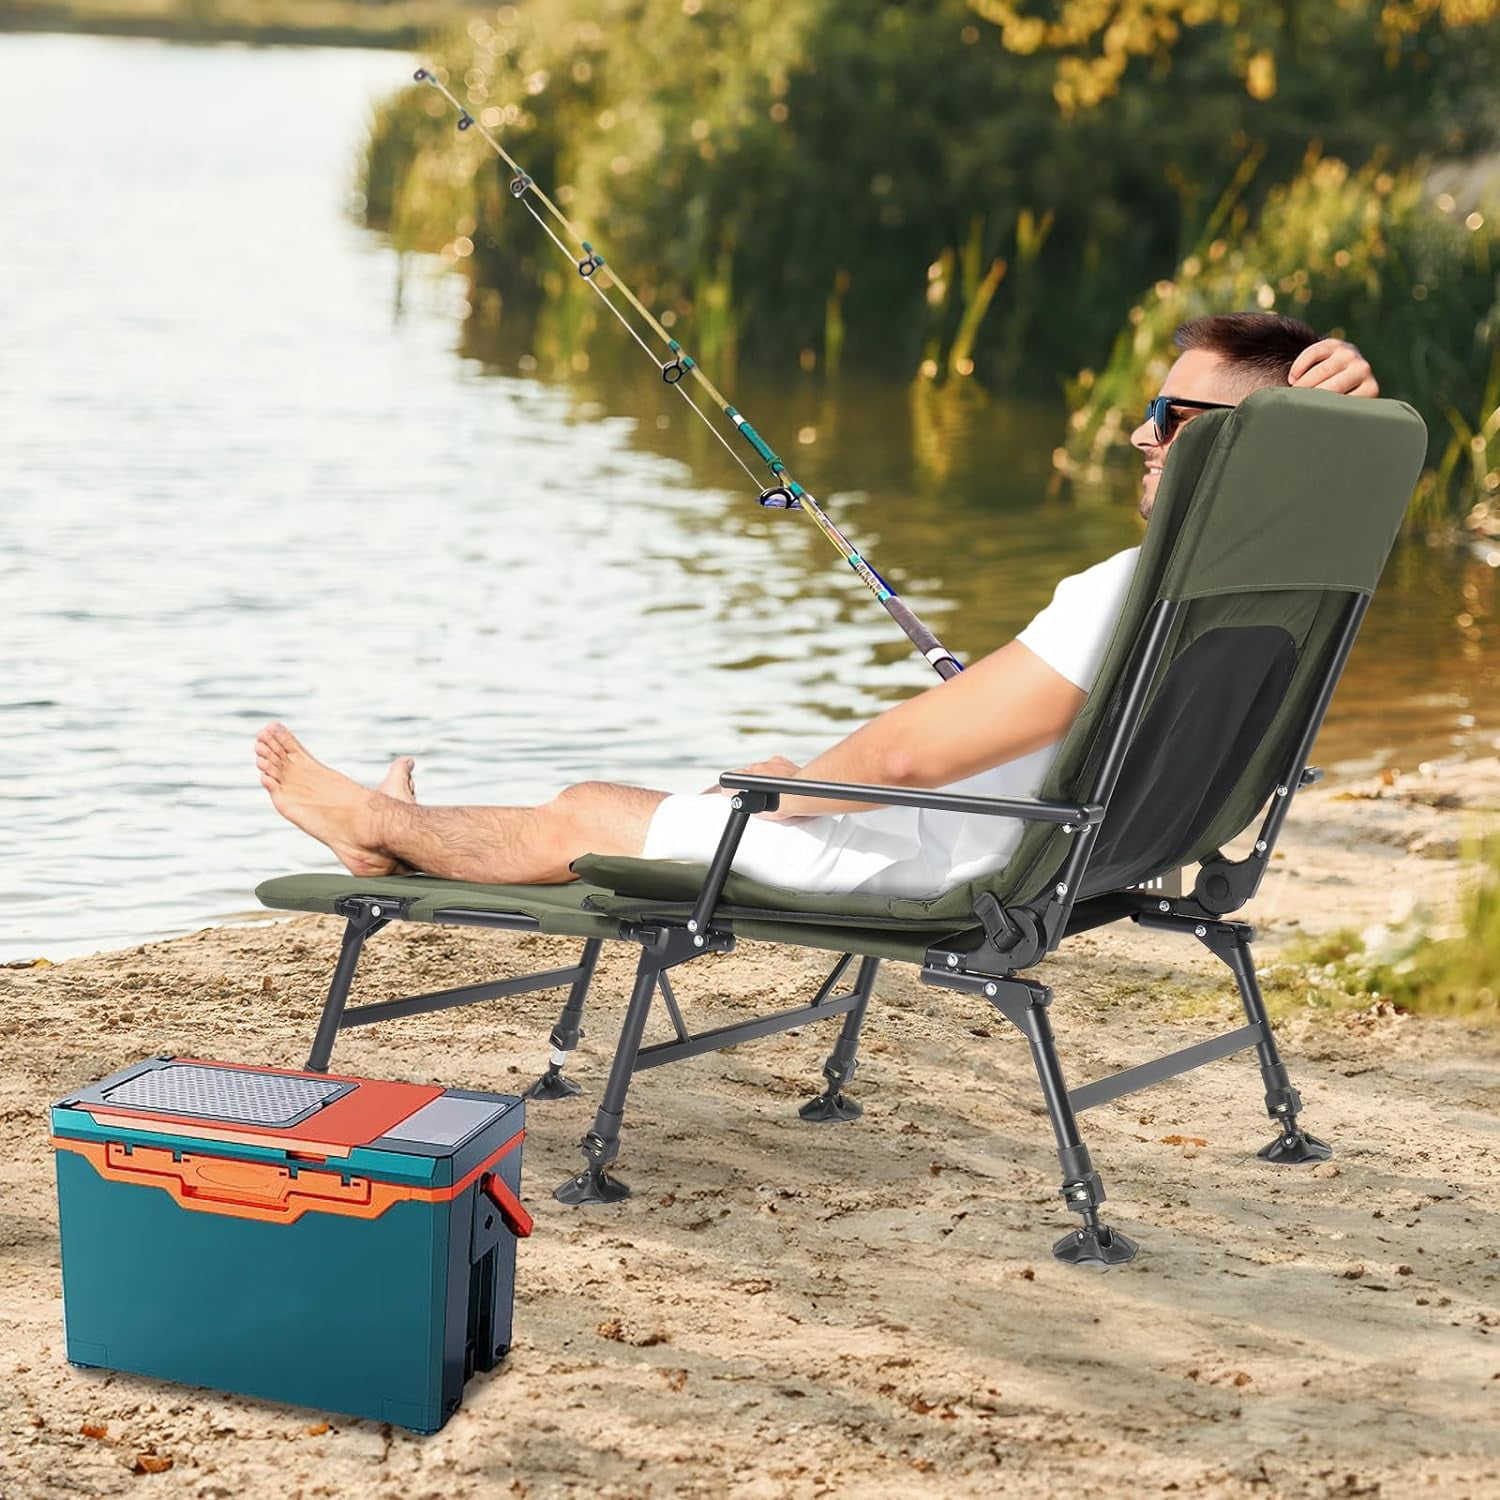 Fishing Chair Beach Chair 150kg Heavy Duty Seat Portable Durable Camping  Stool